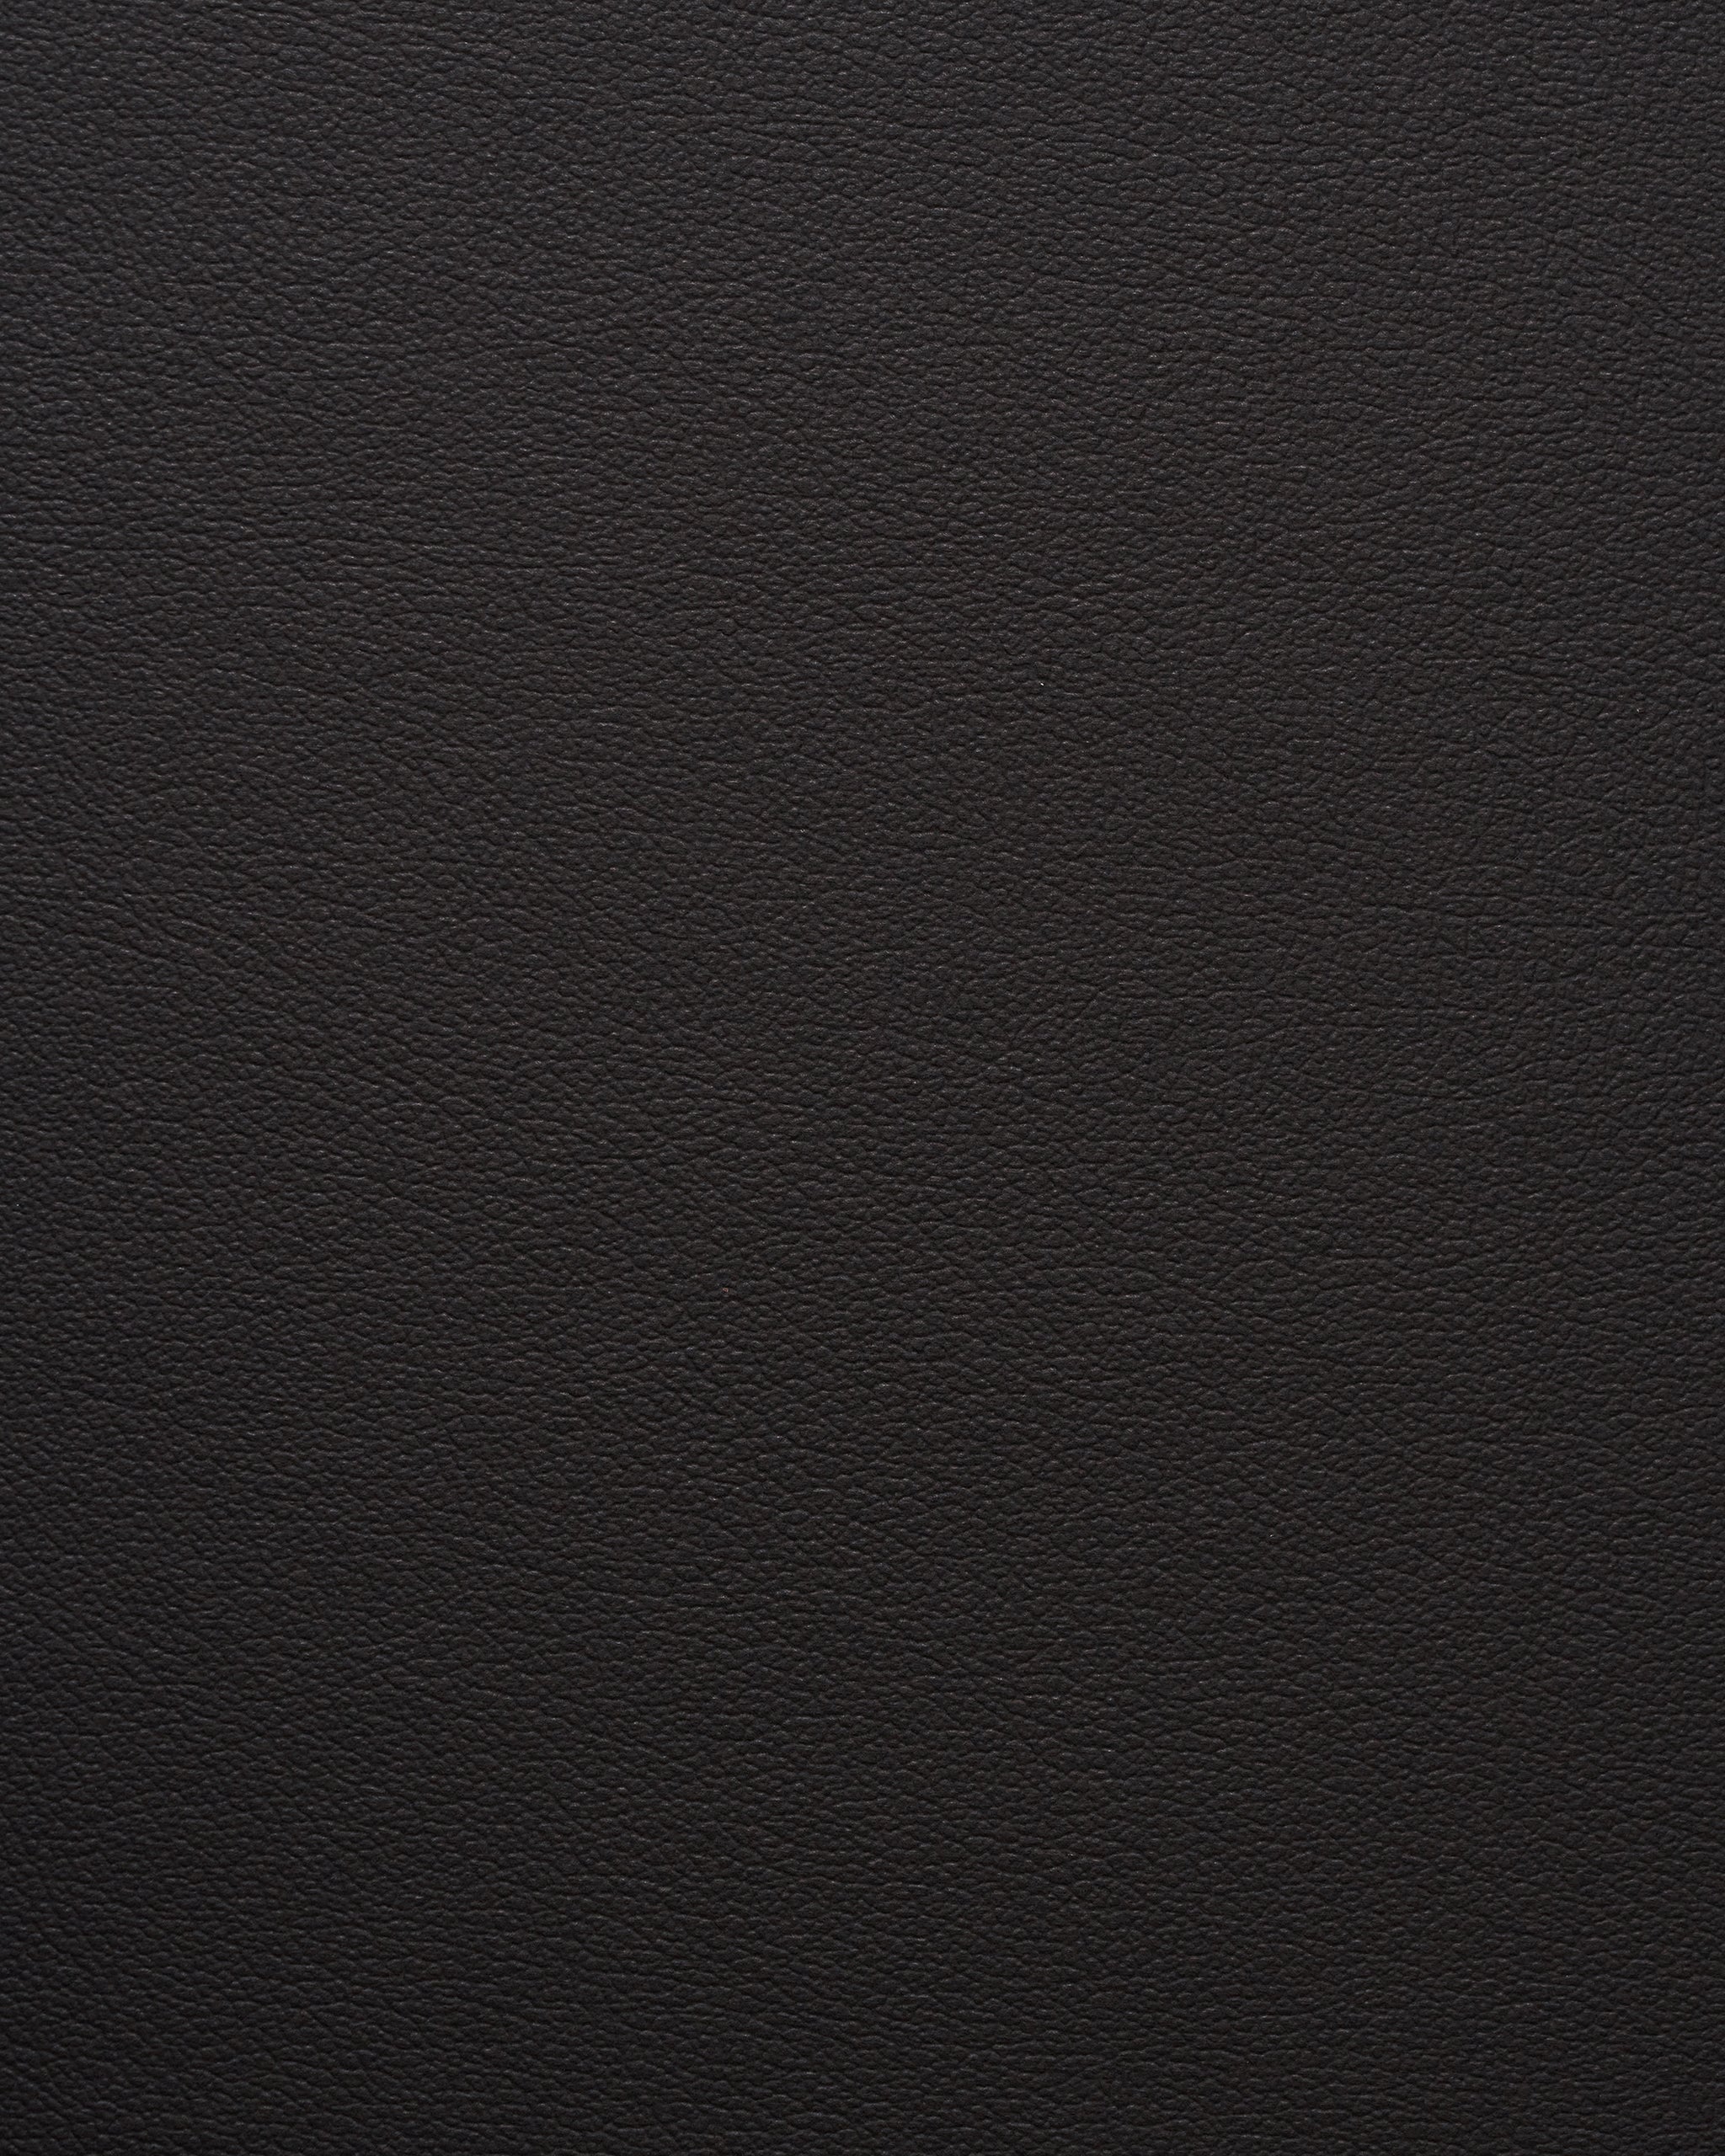 Upholstery - Black Leatherette